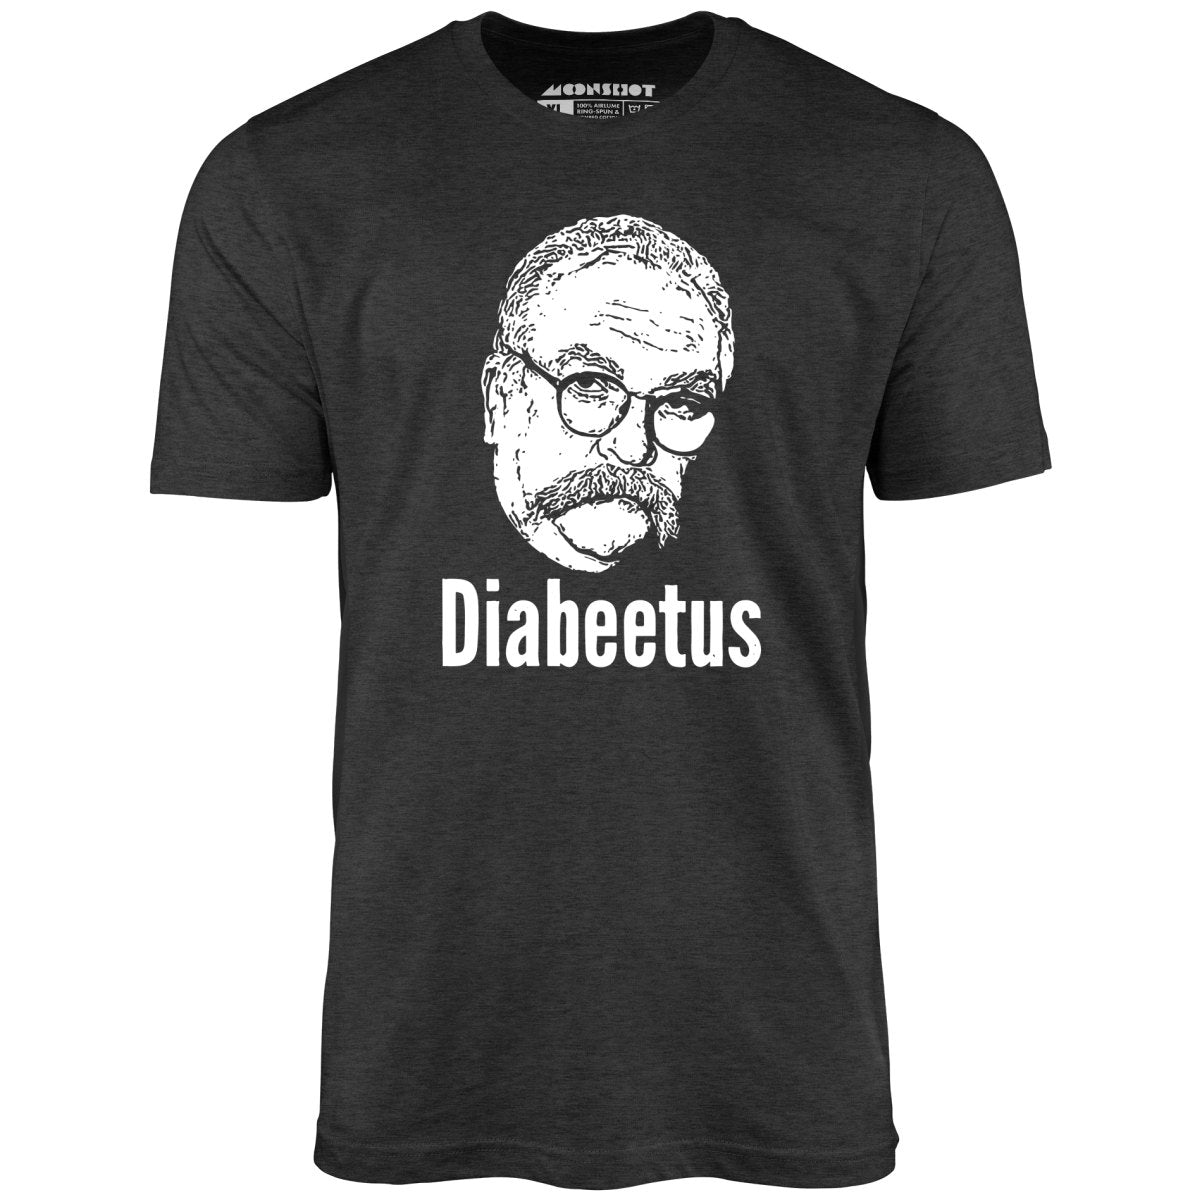 Diabeetus - Unisex T-Shirt